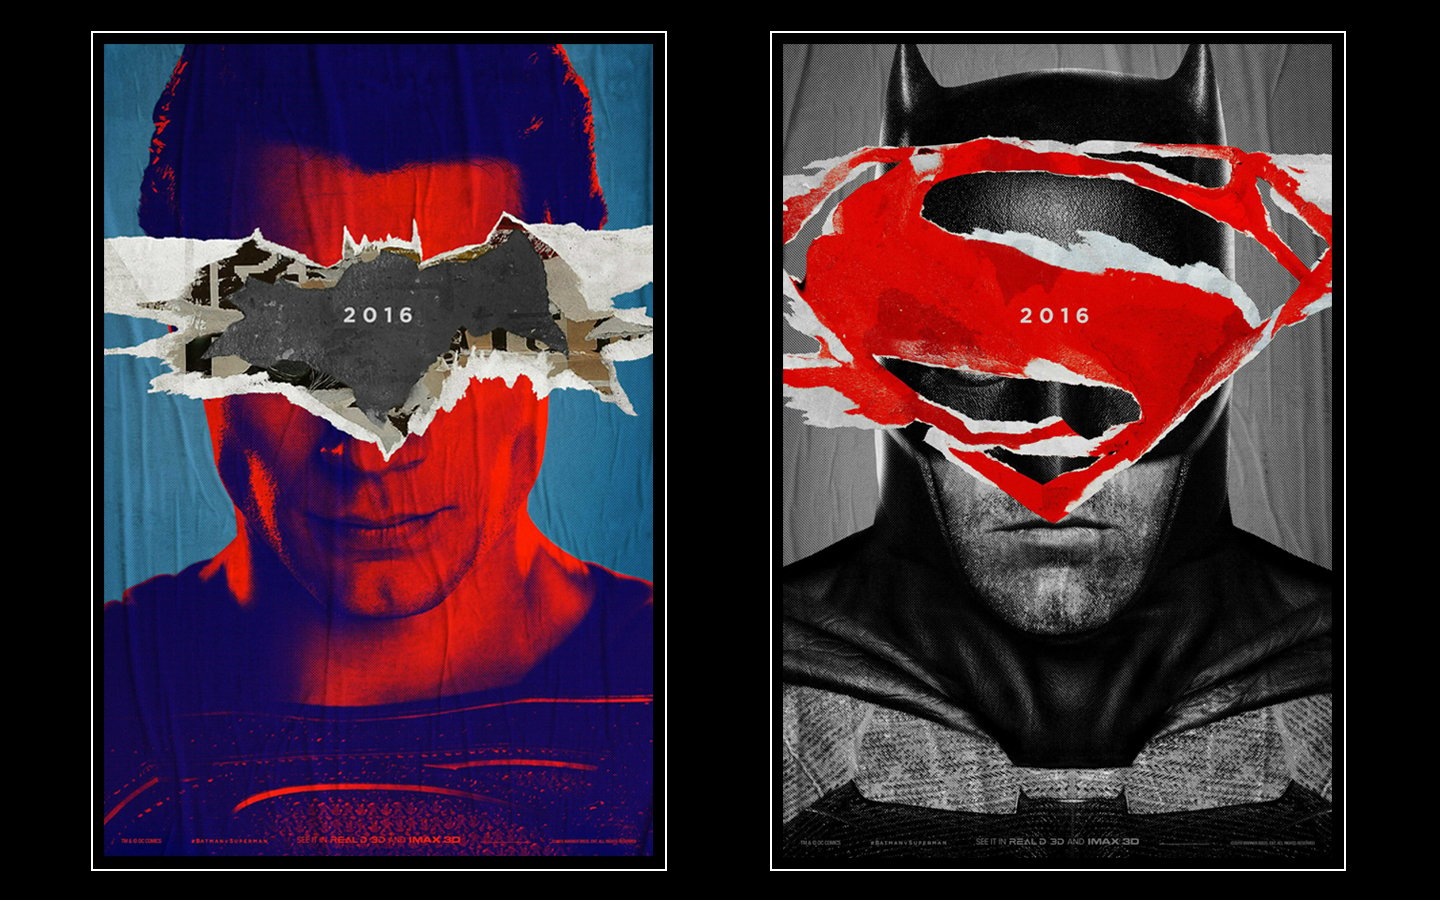 Batman v Superman wallpaper by falcon1282 on